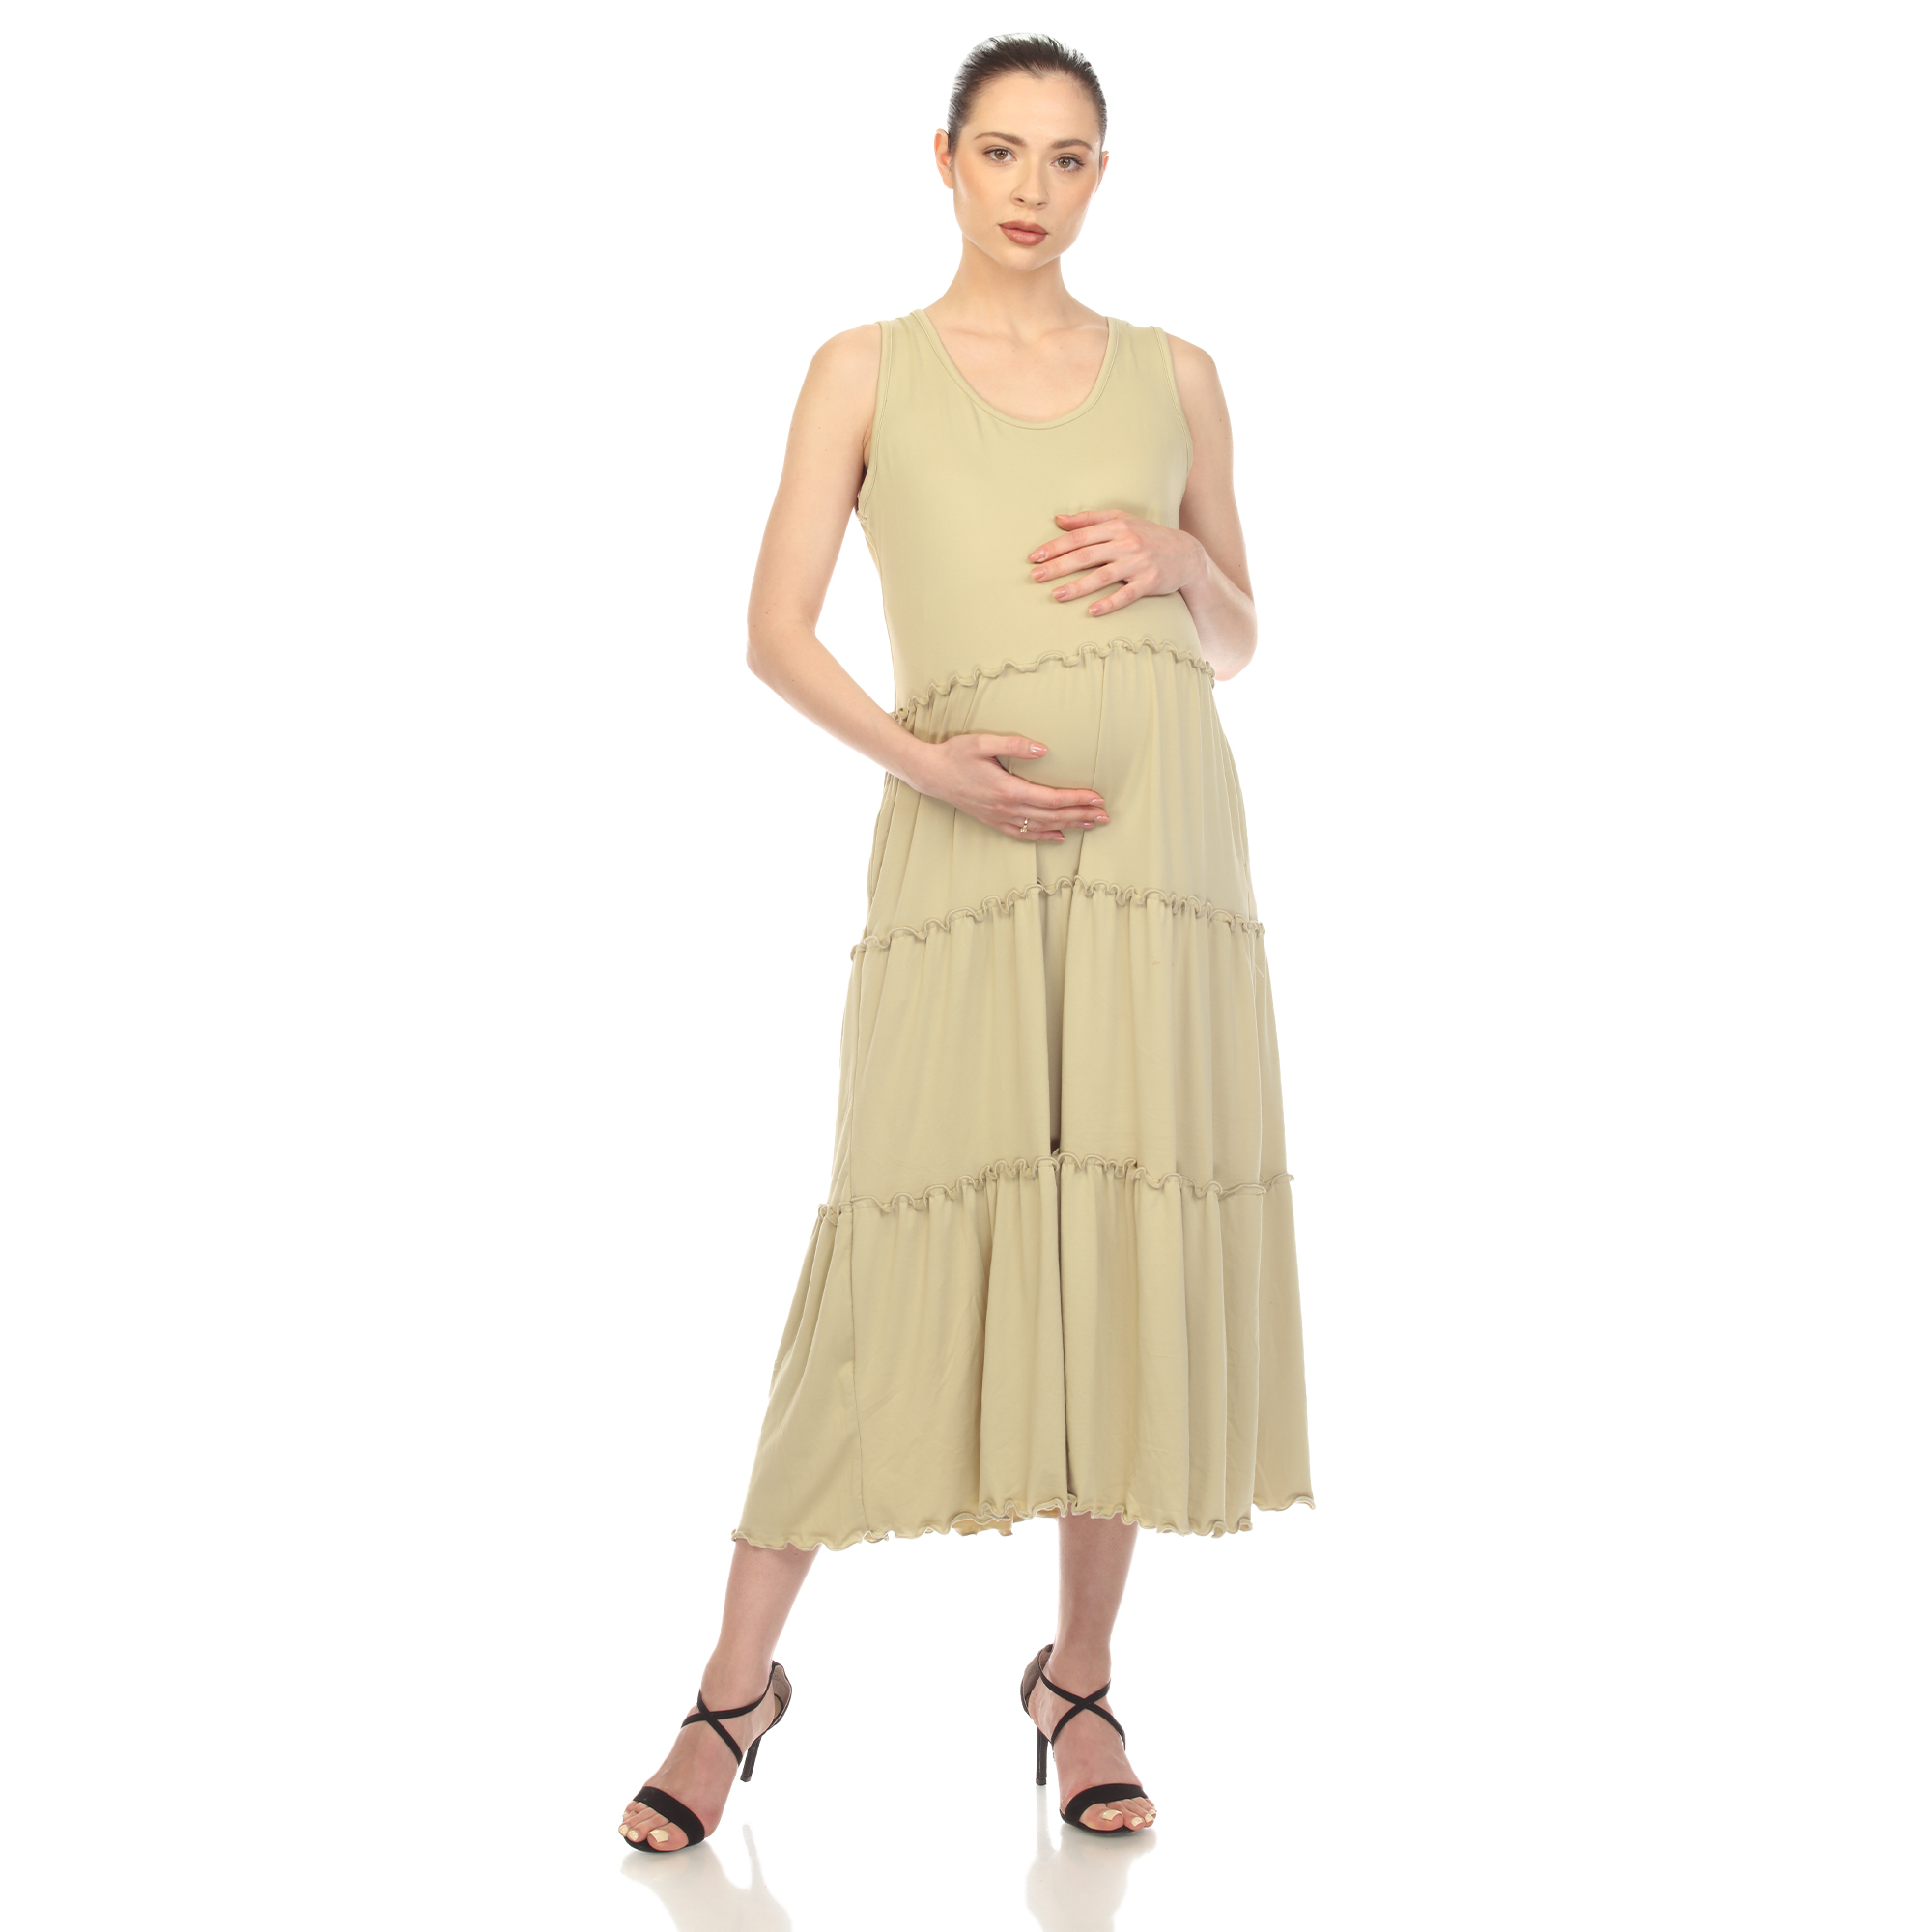 White Mark Women's Maternity Scoop Neck Tiered Midi Dress - Pale Olive, 1X